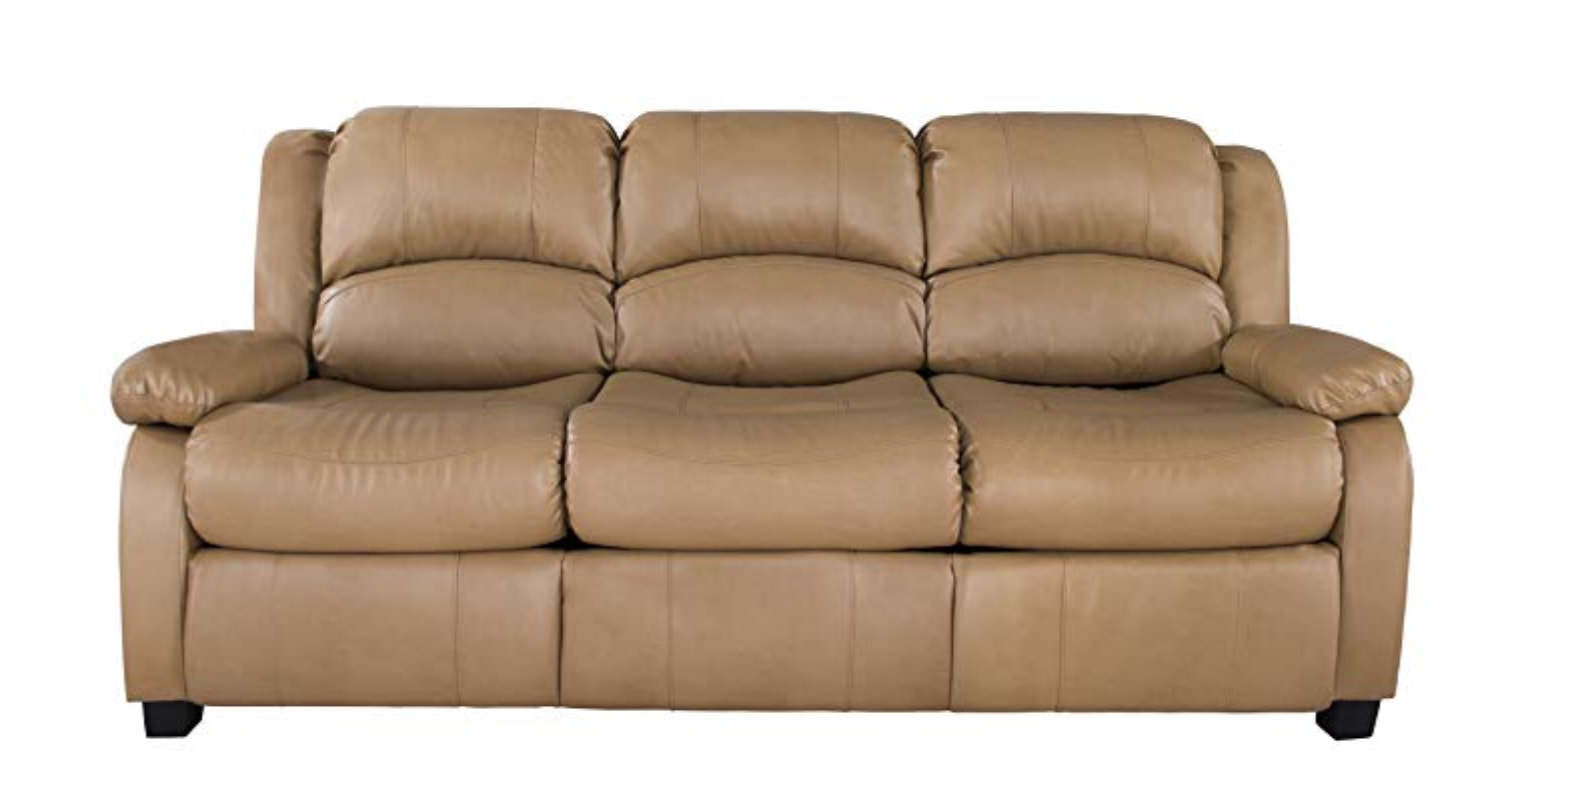 60 rv sofa sleeper w hide a bed